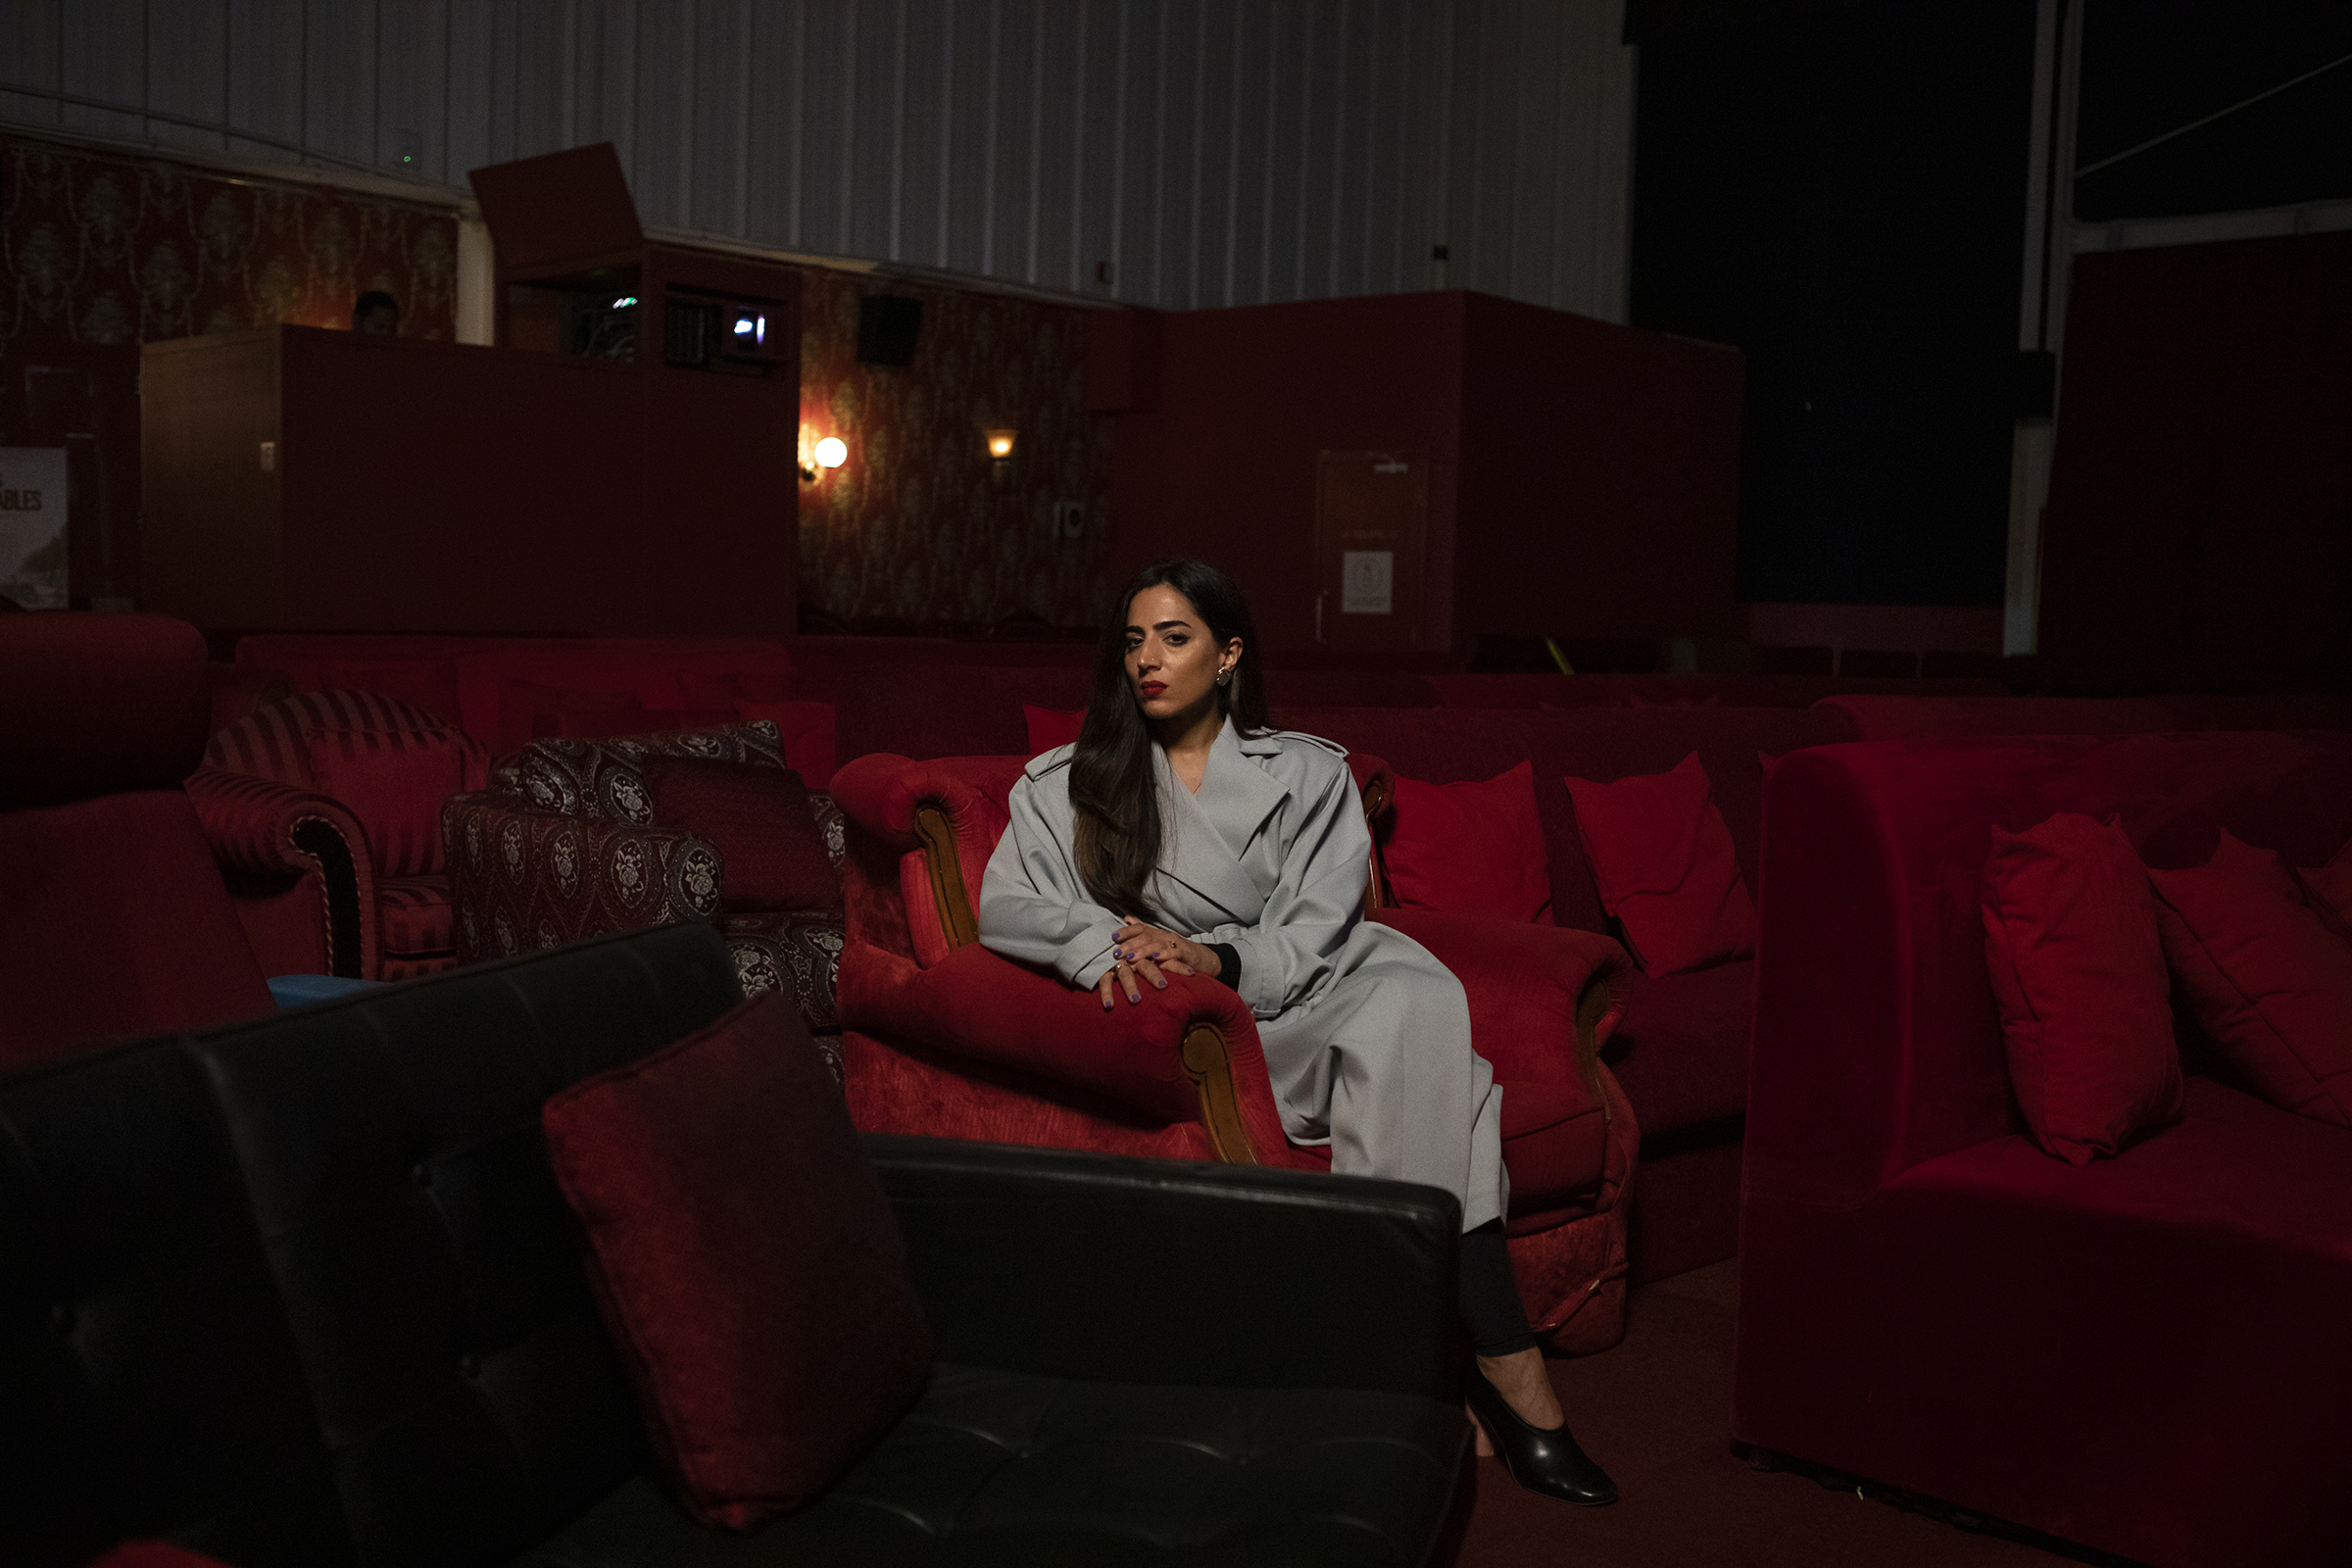 Butheina Kazim, co-founder of Cinema Akil, an independent cinema platform in Dubai. (Natalie Naccache for TIME)